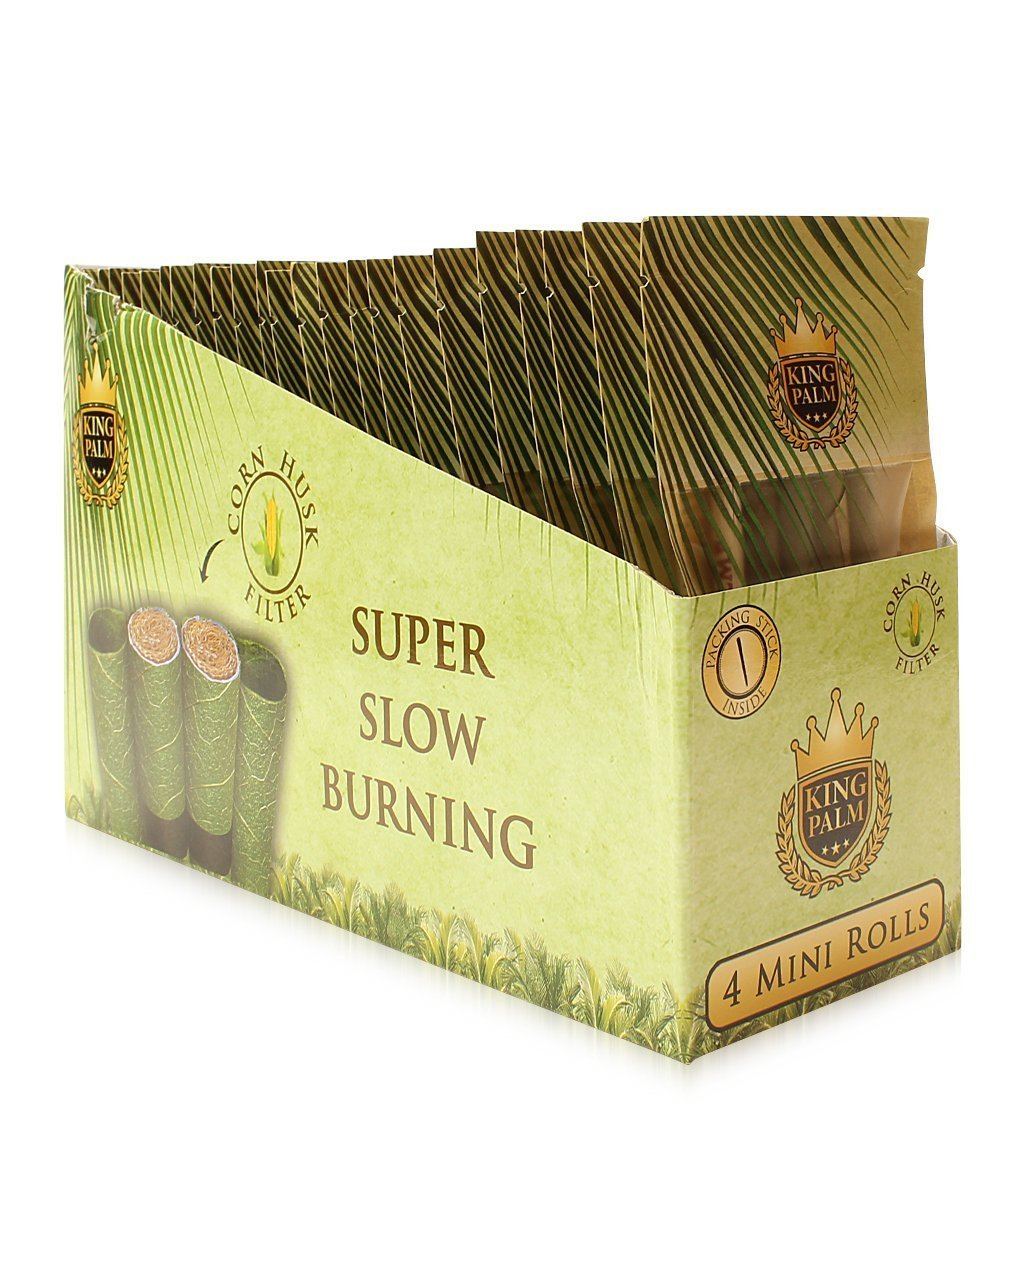 King Palms Super Slow Burning Wraps - Minis (4 Pack) Blunt Wrap King Palm 